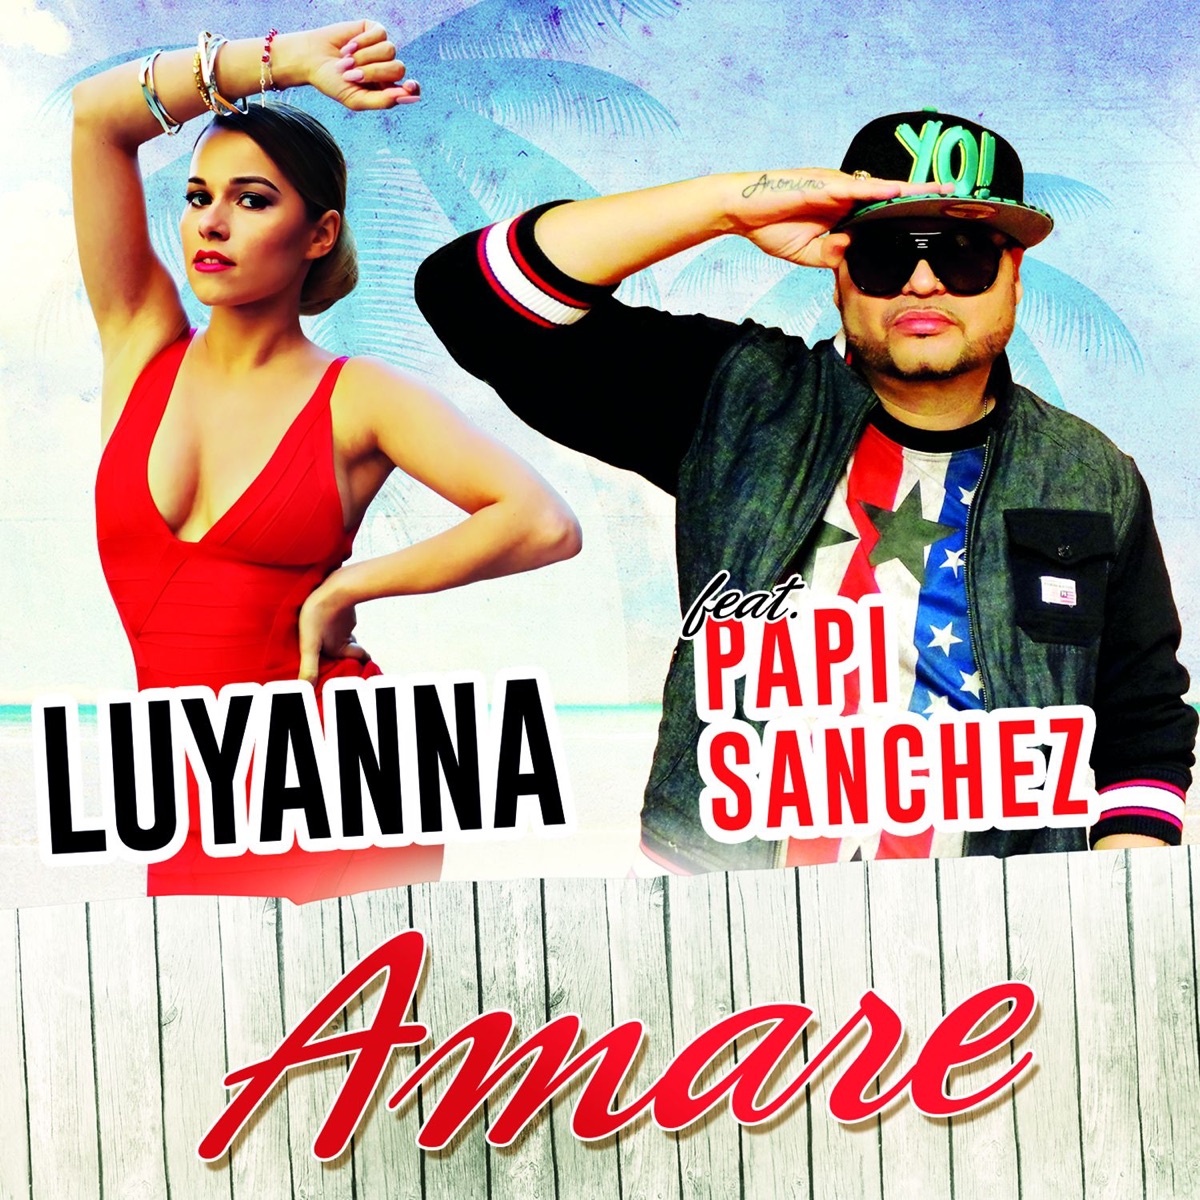 Enamorame (Yeah Baby) [Latino Version] [feat. Papi Sánchez & Luyanna] -  Single par DJ Assad sur Apple Music